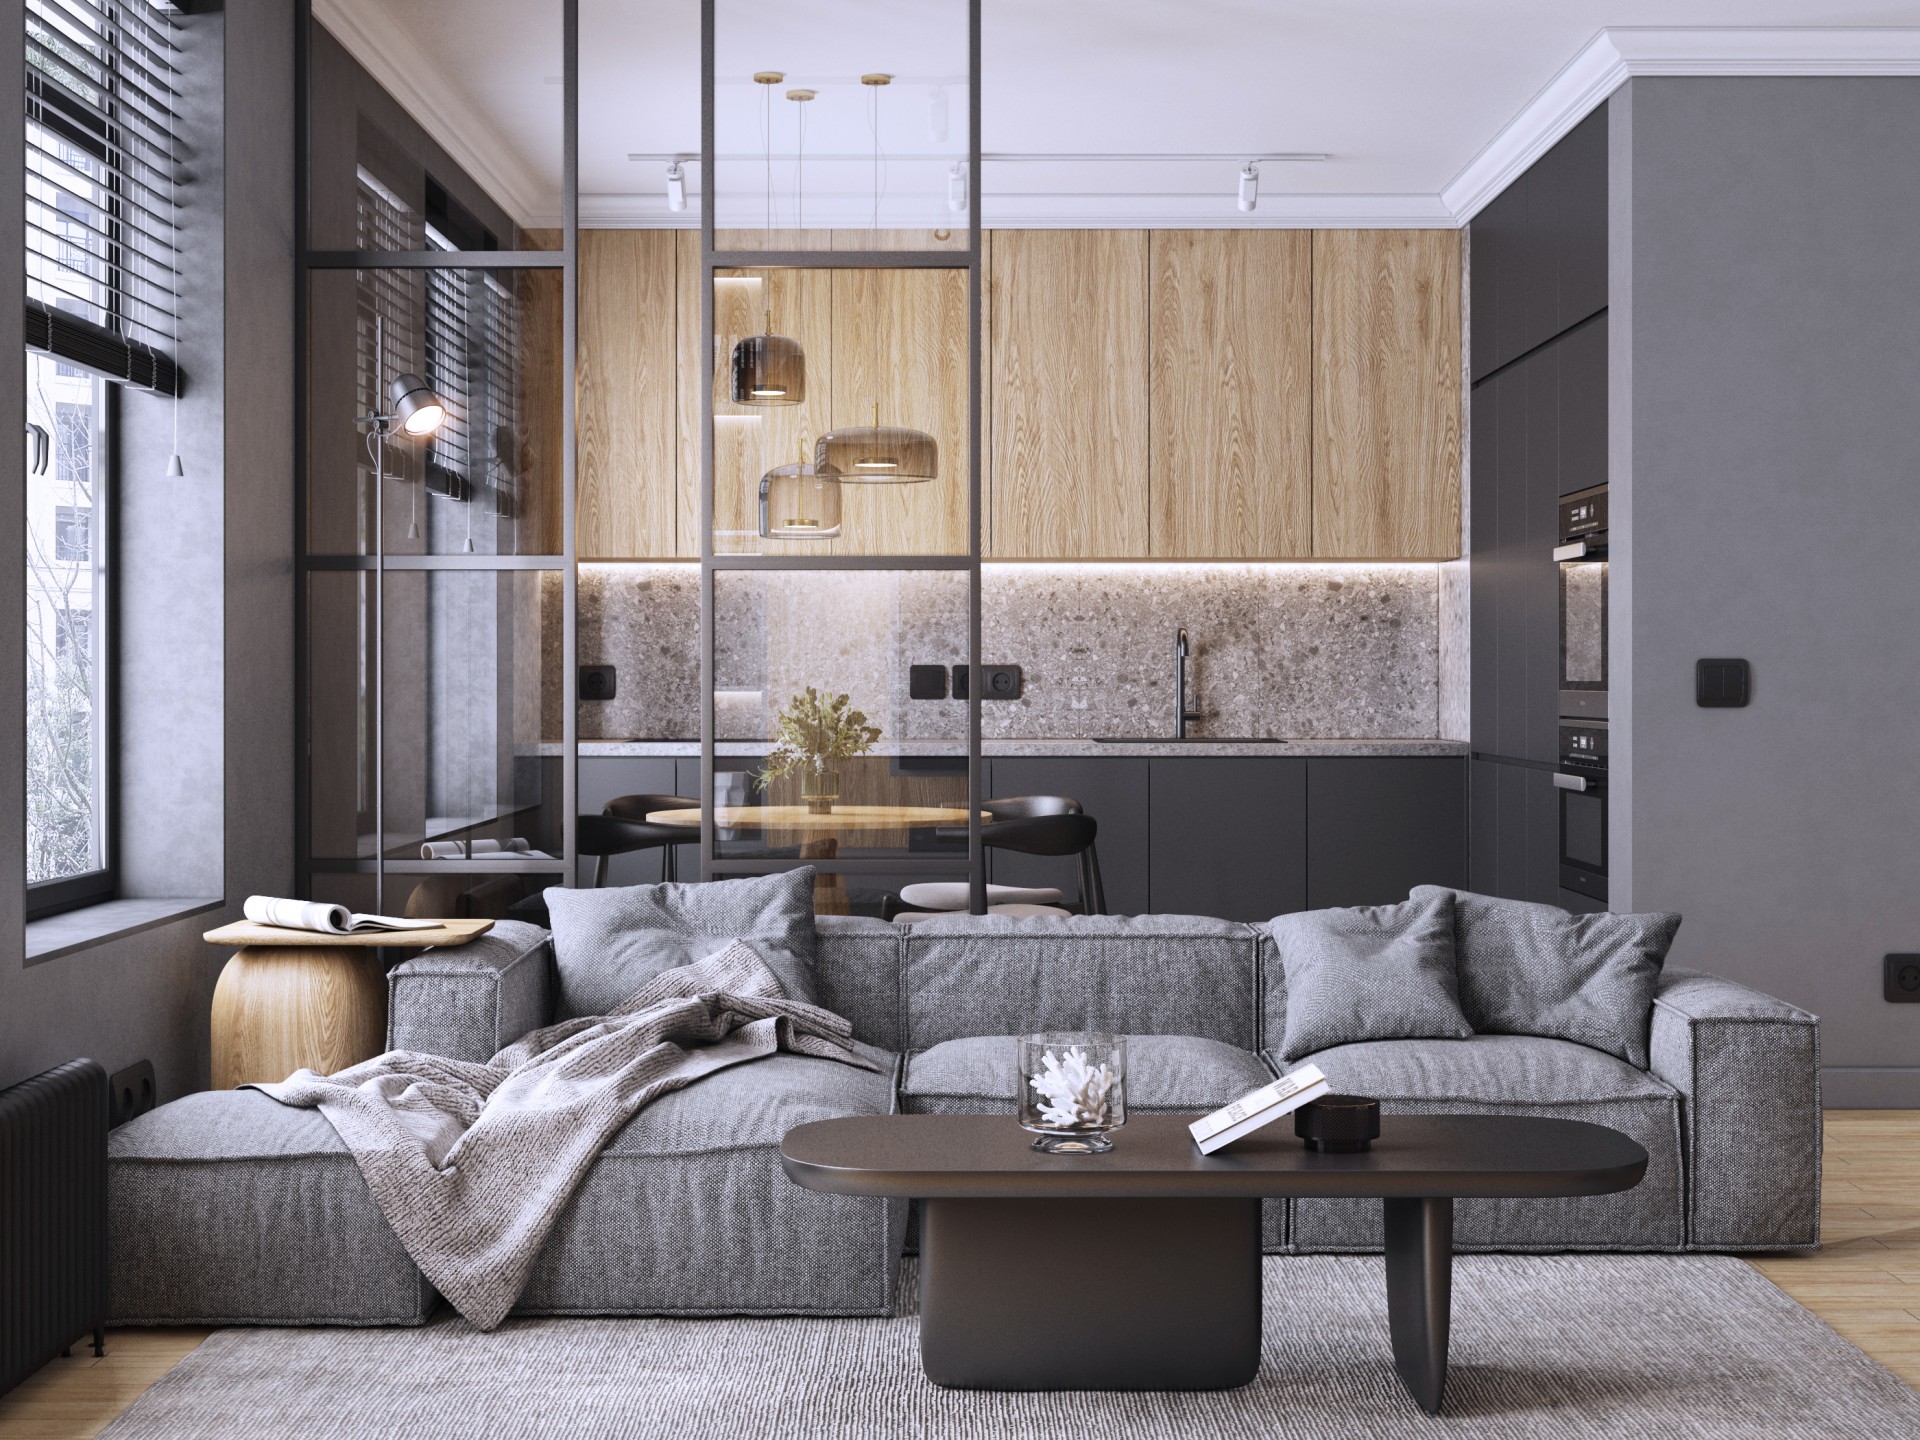 VWArtclub - Apartment Design